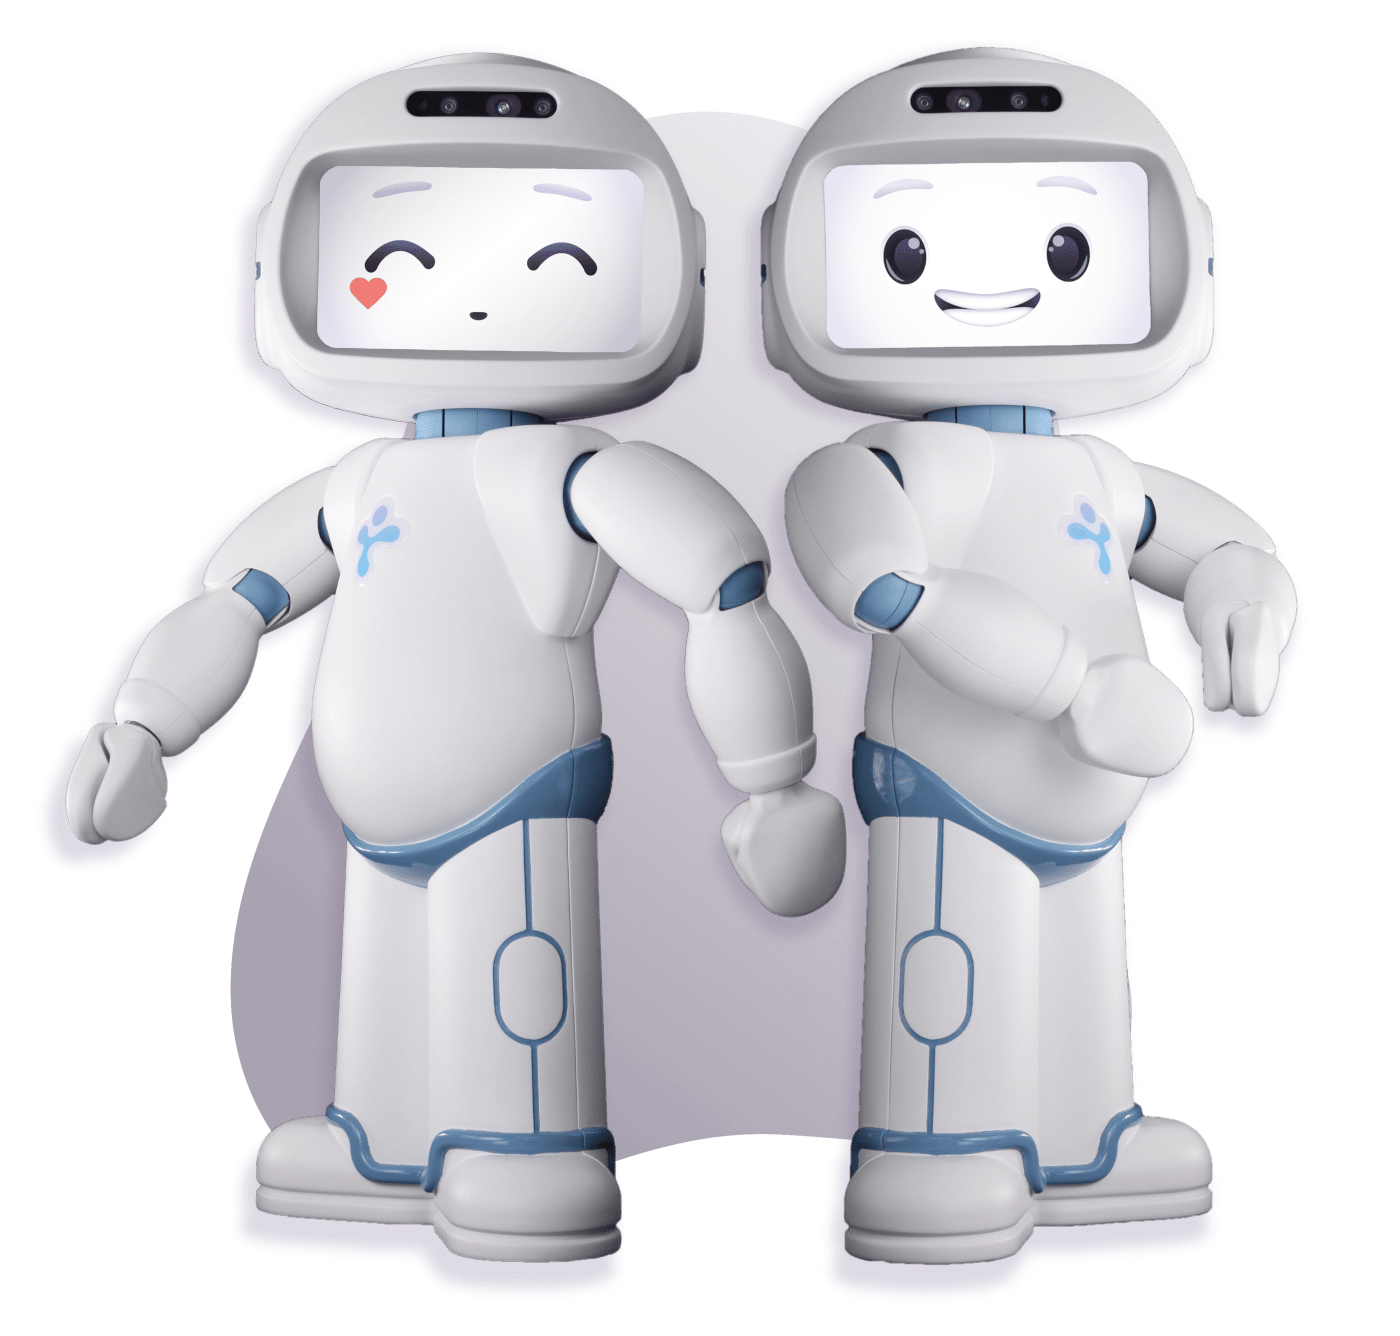 QTrobot platform for human robot interaction and social robotics research